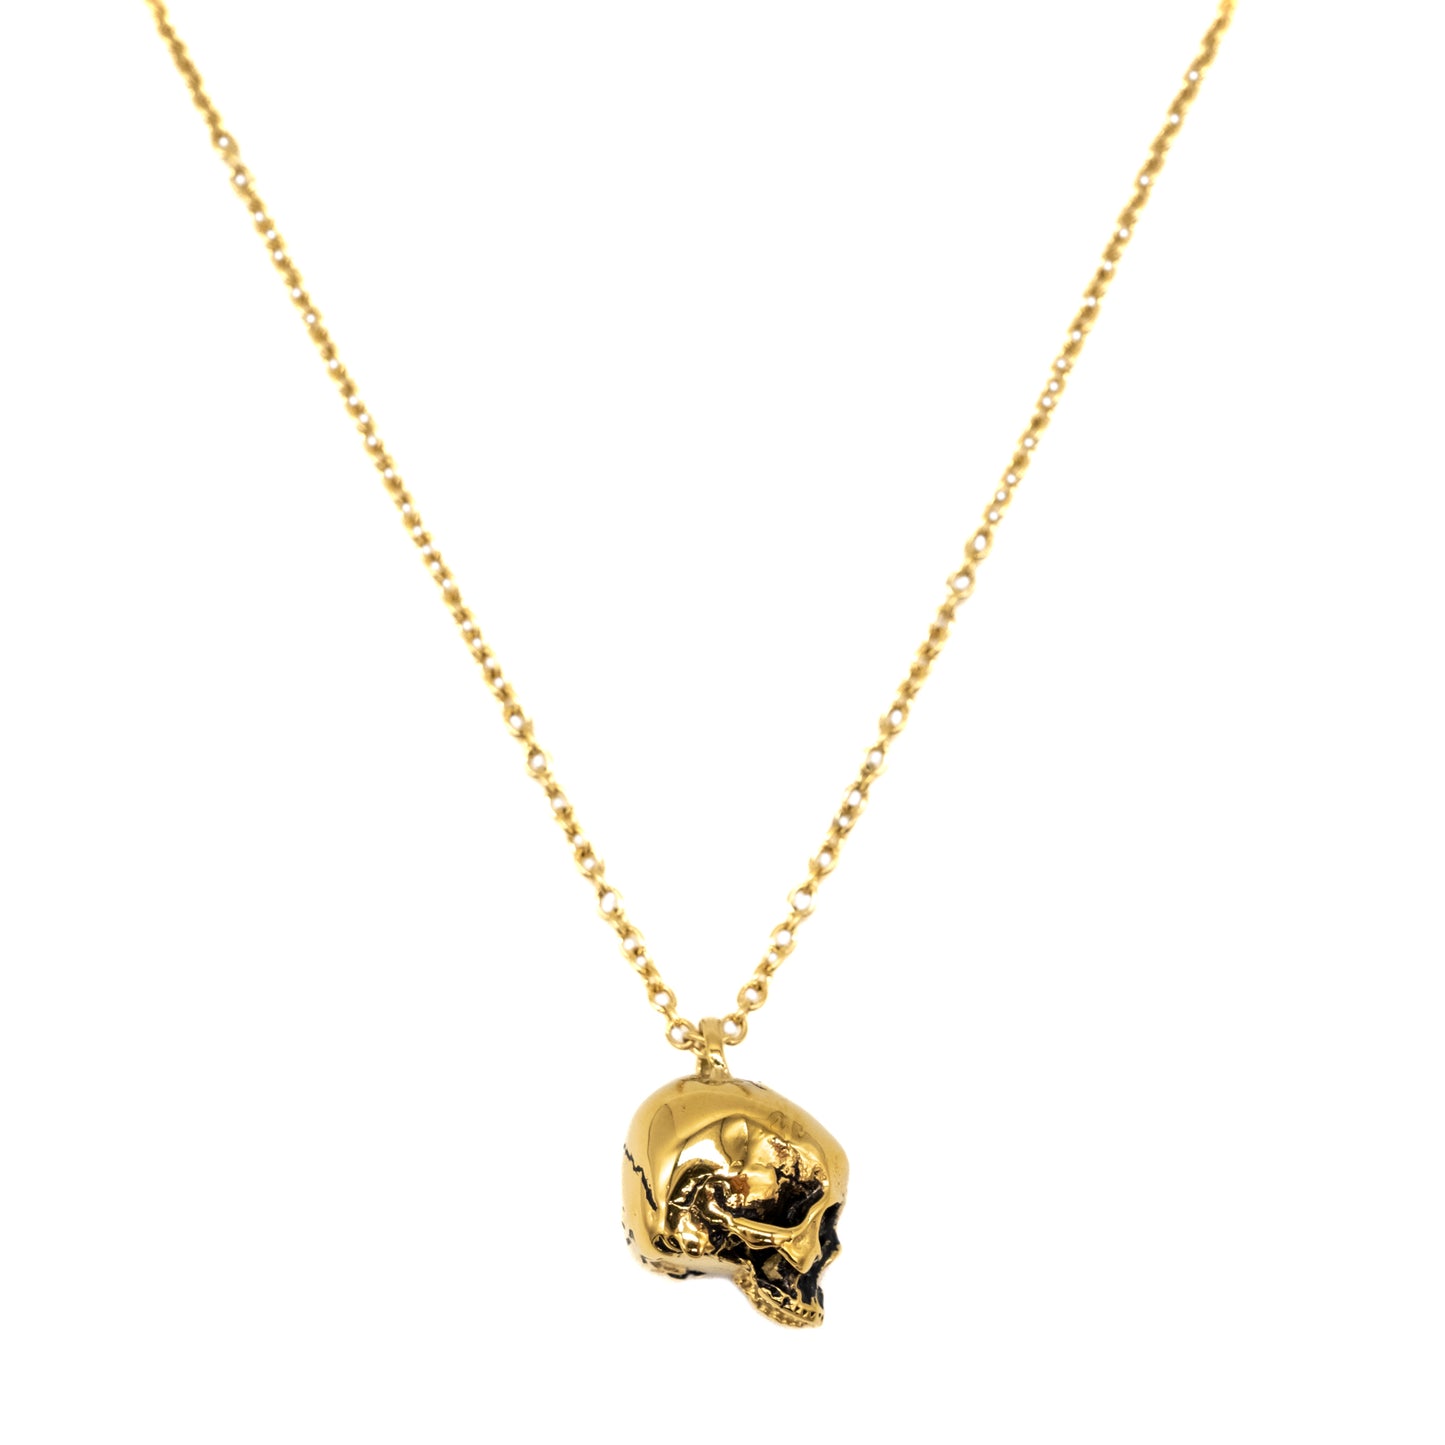 Gold Hel Skull Necklace Mysticum Luna